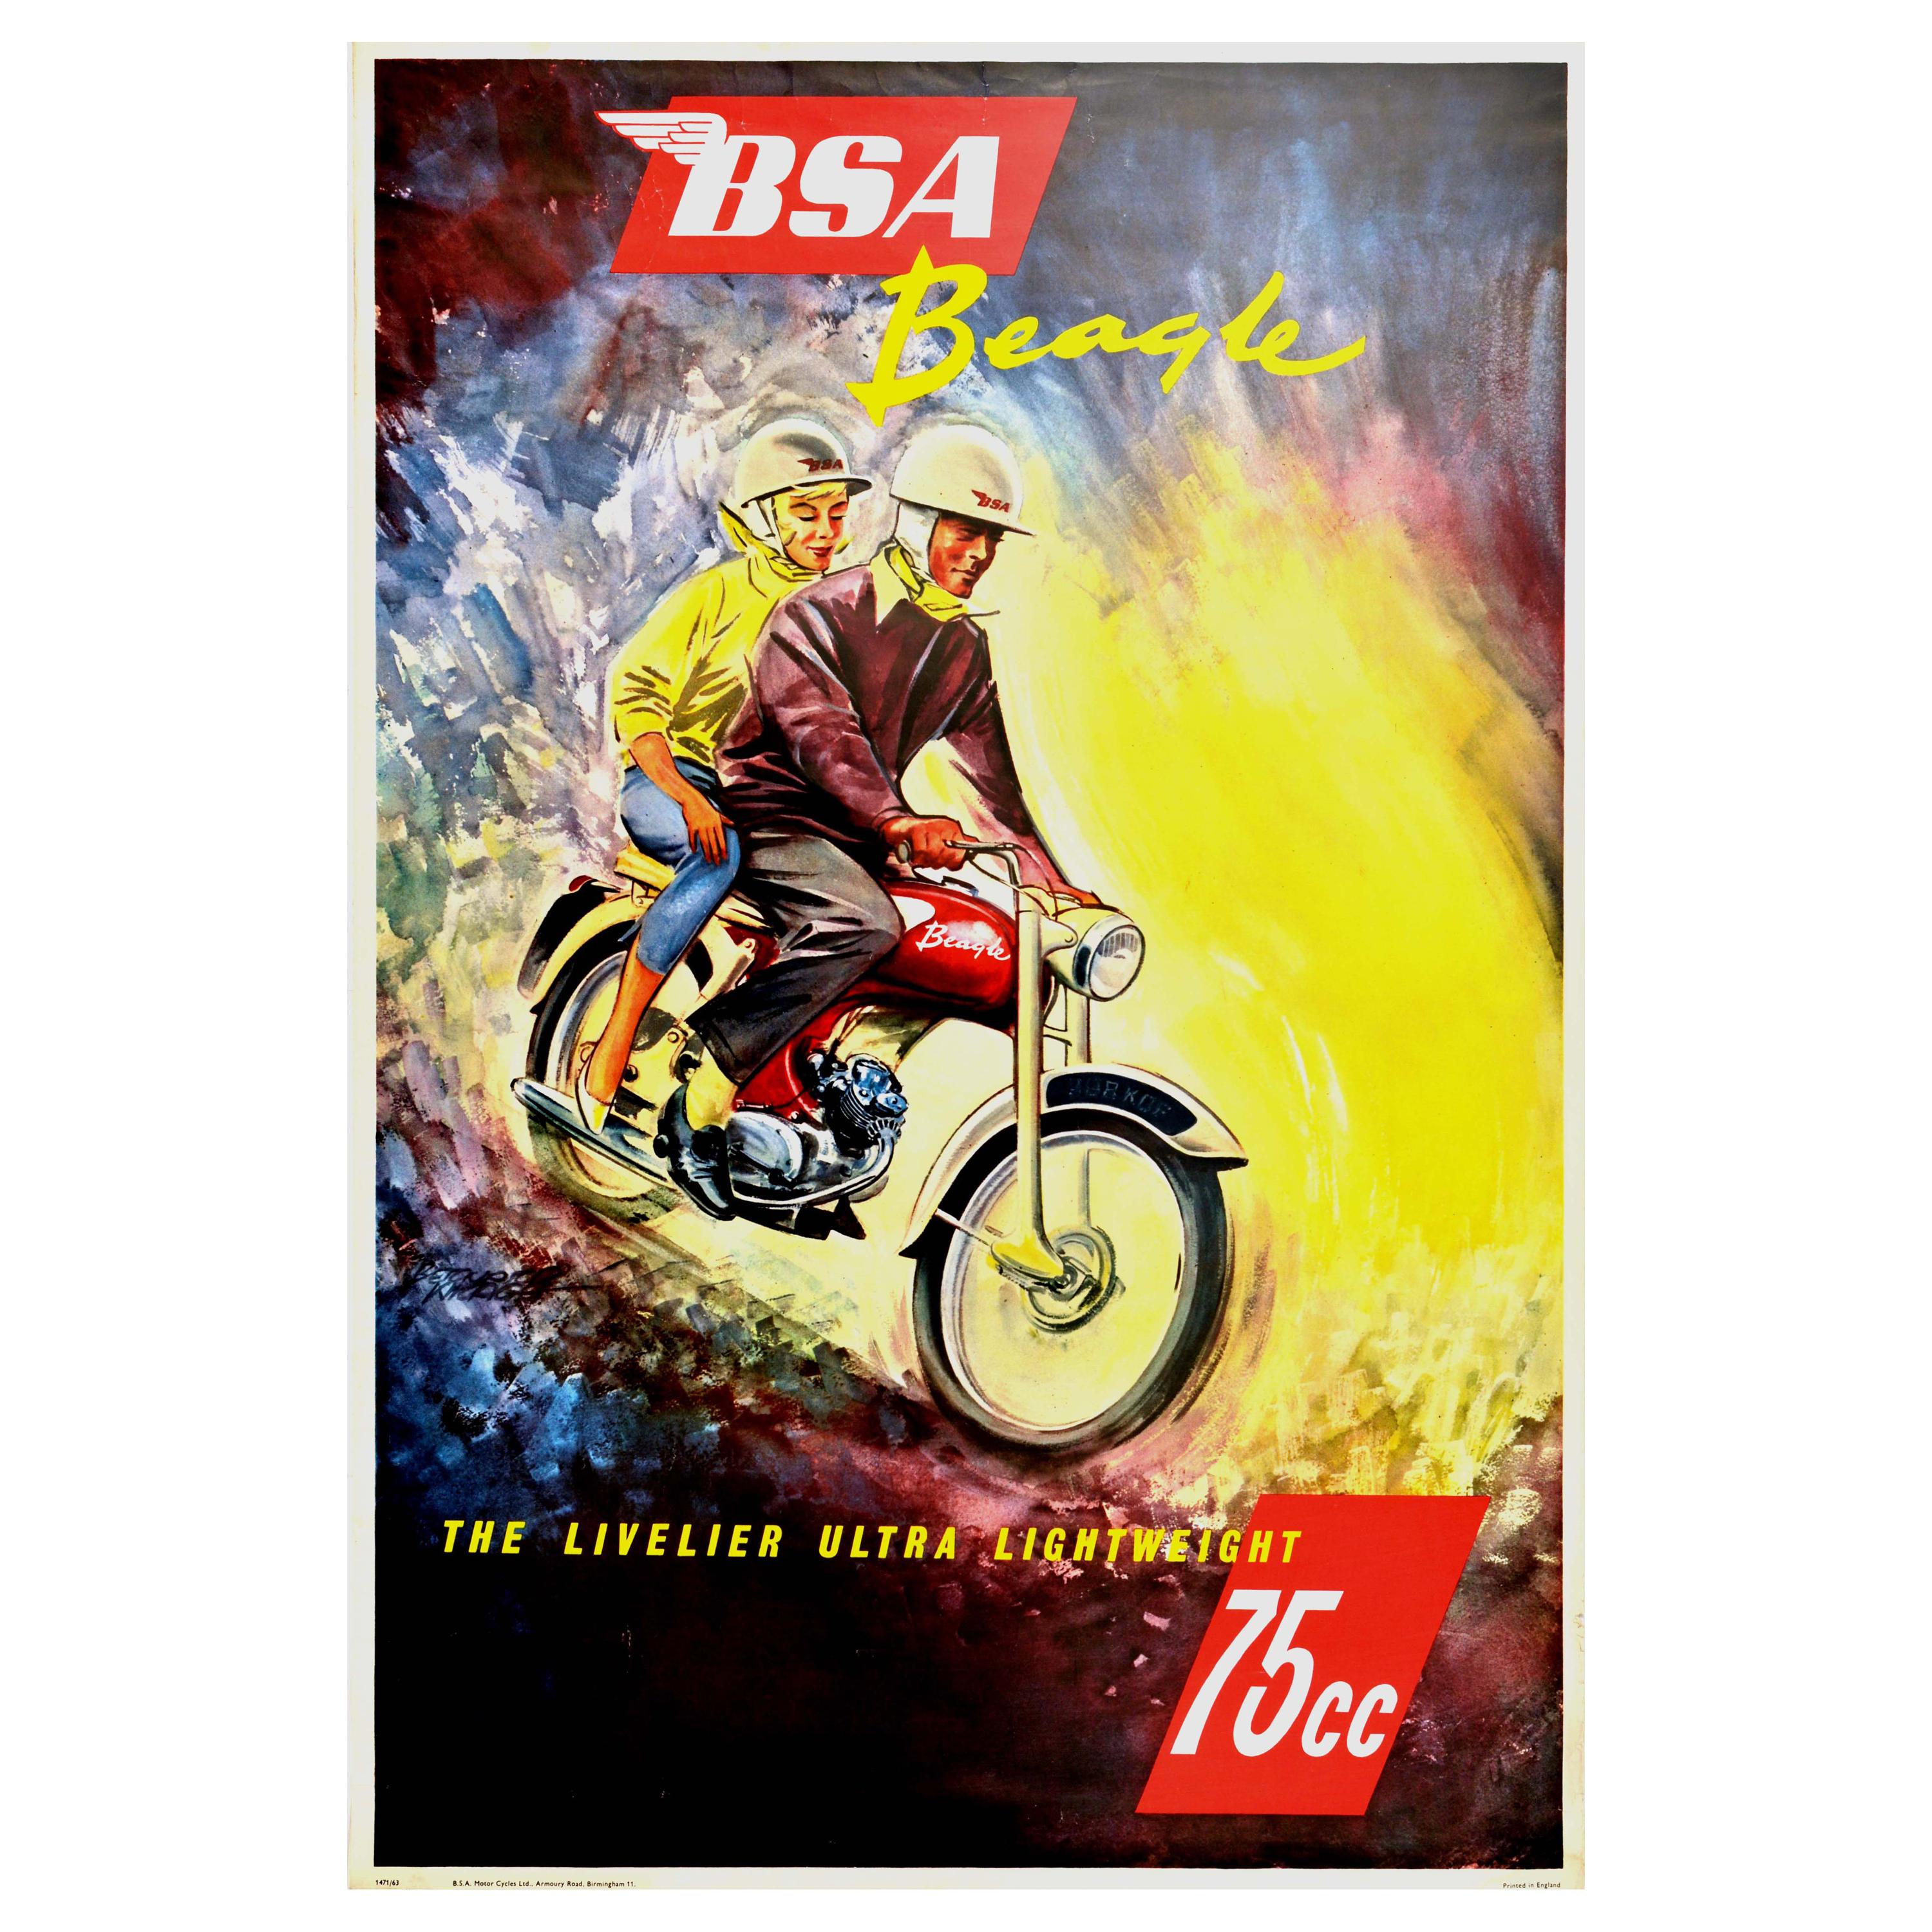 Original Vintage Poster BSA Beagle Motorcycle Art Ultra Lightweight 75cc Engine For Sale